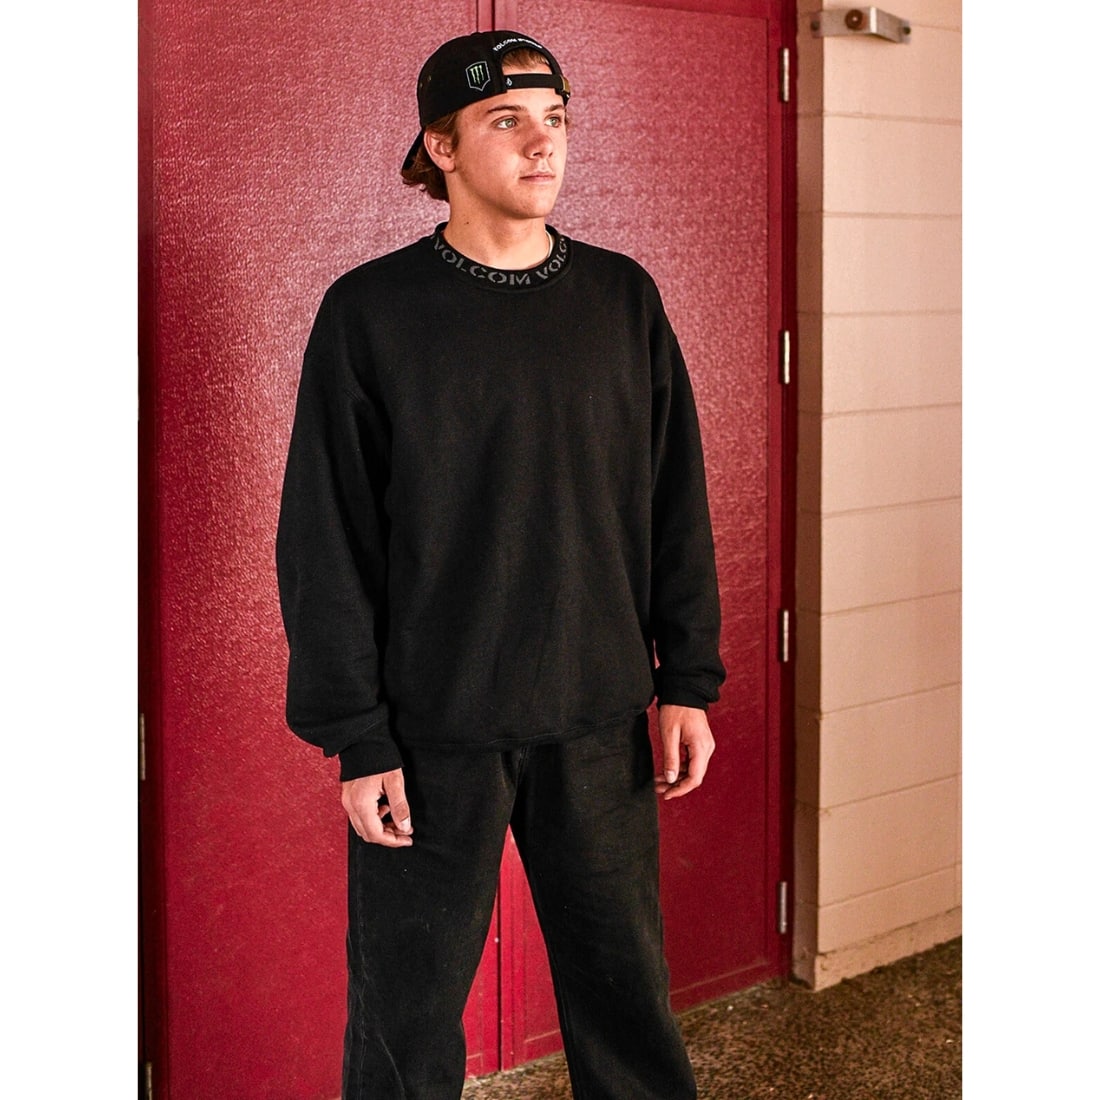 Volcom Skate Vitals Crew - Black - Mens Crew Neck Sweatshirt by Volcom